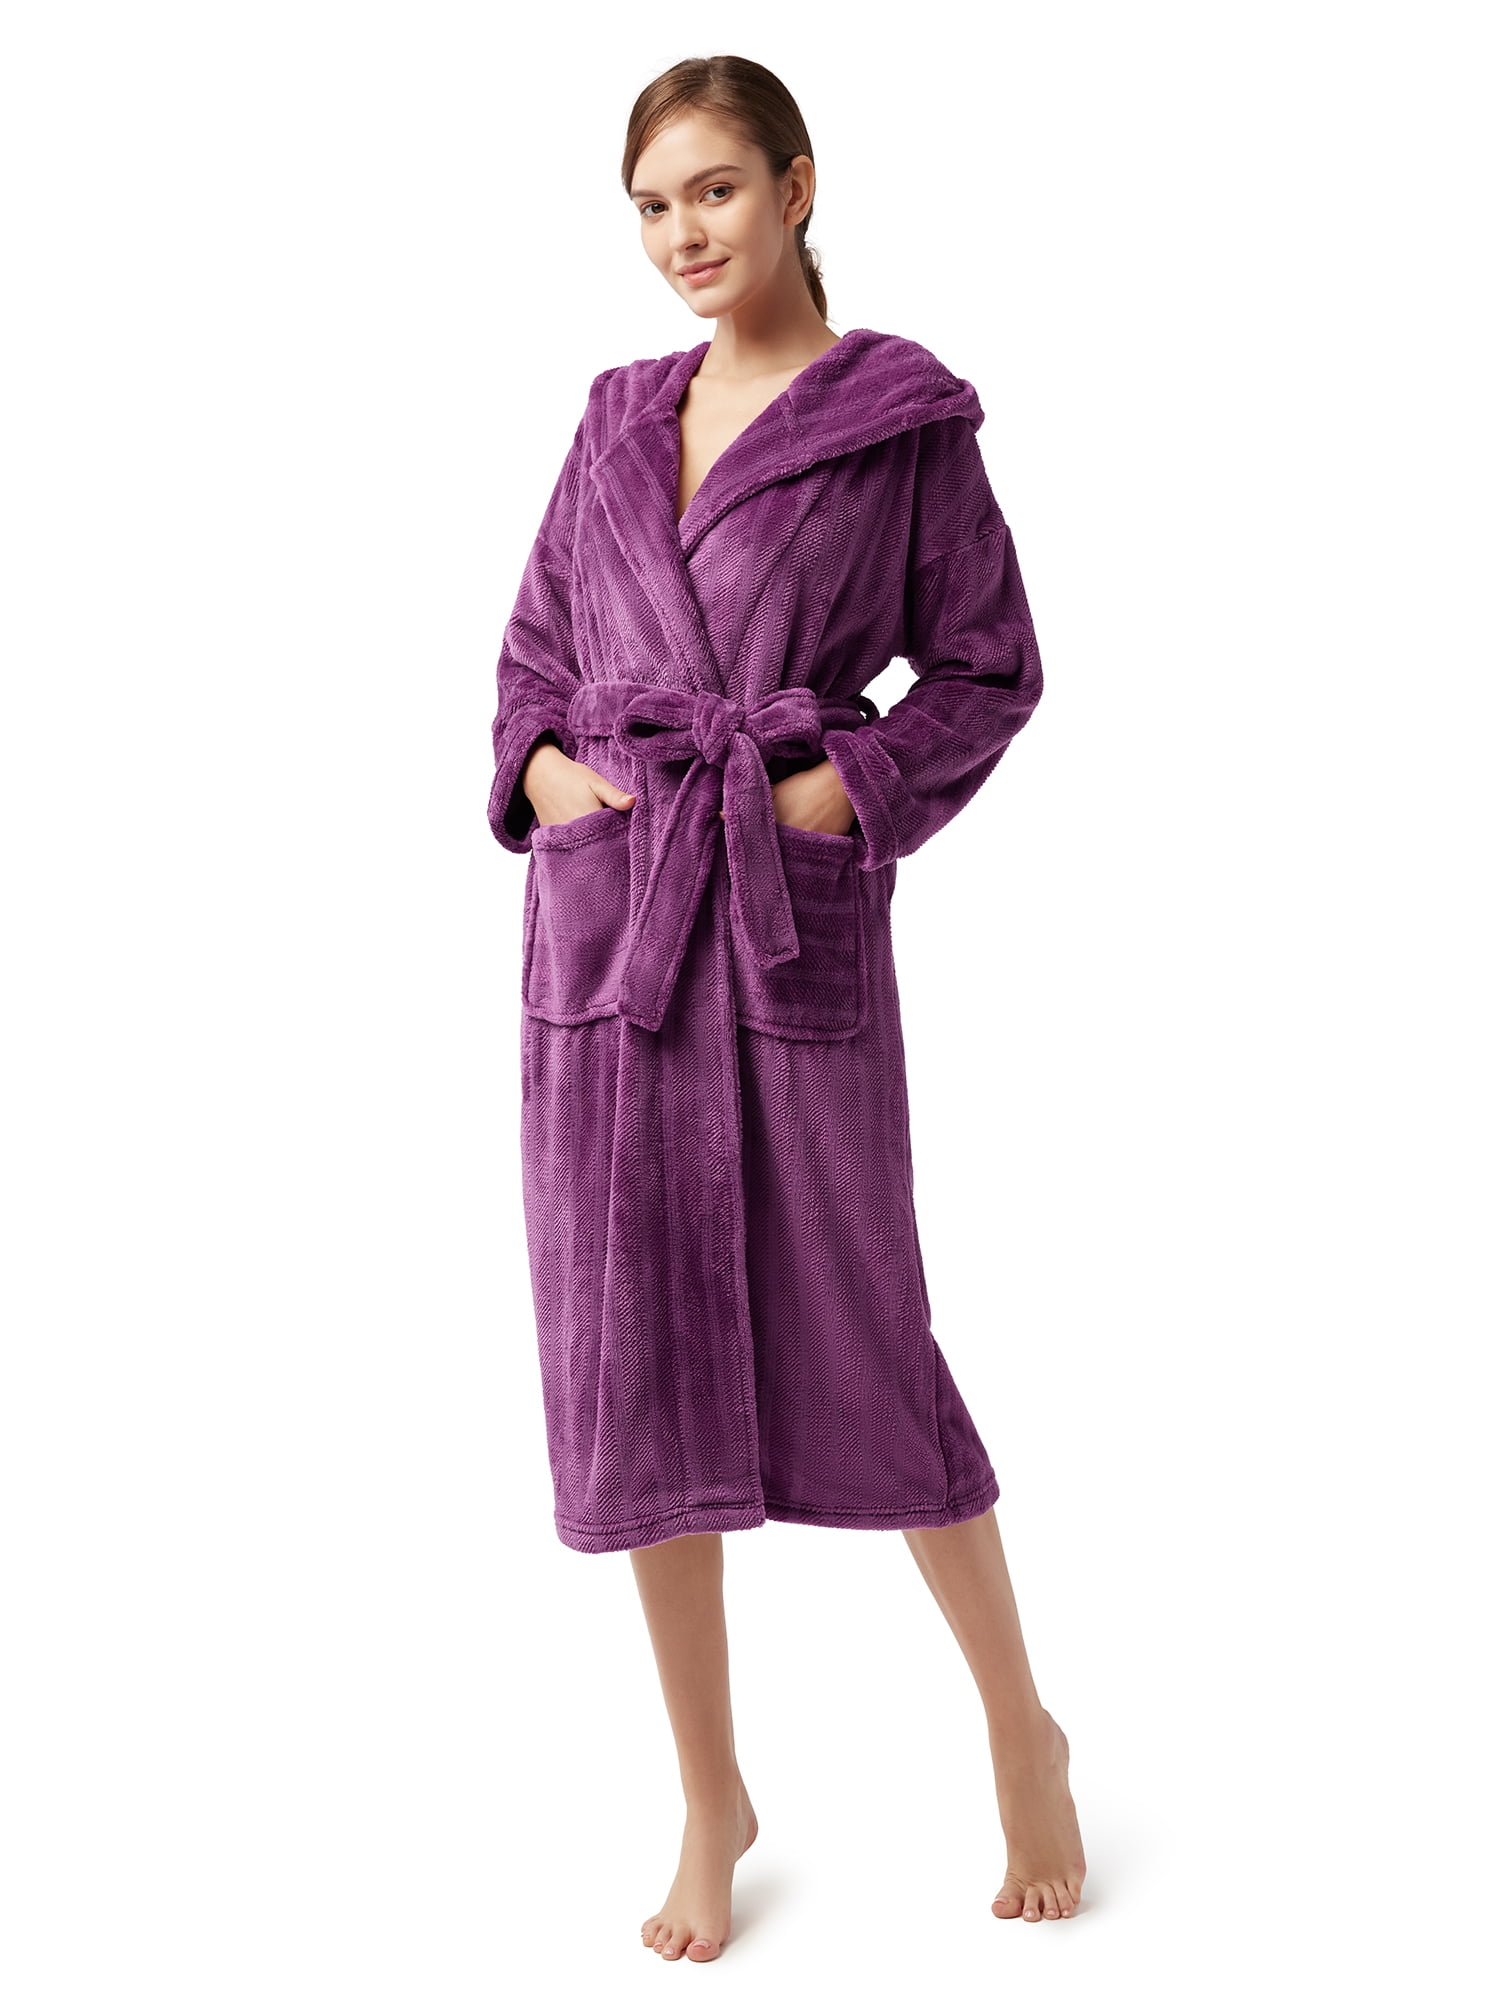 Whear Robe Womens Shawl Collar Hooded Bathrobe Sleepwear Plain Long Sleeve Loungewear Pajama Nightgown 